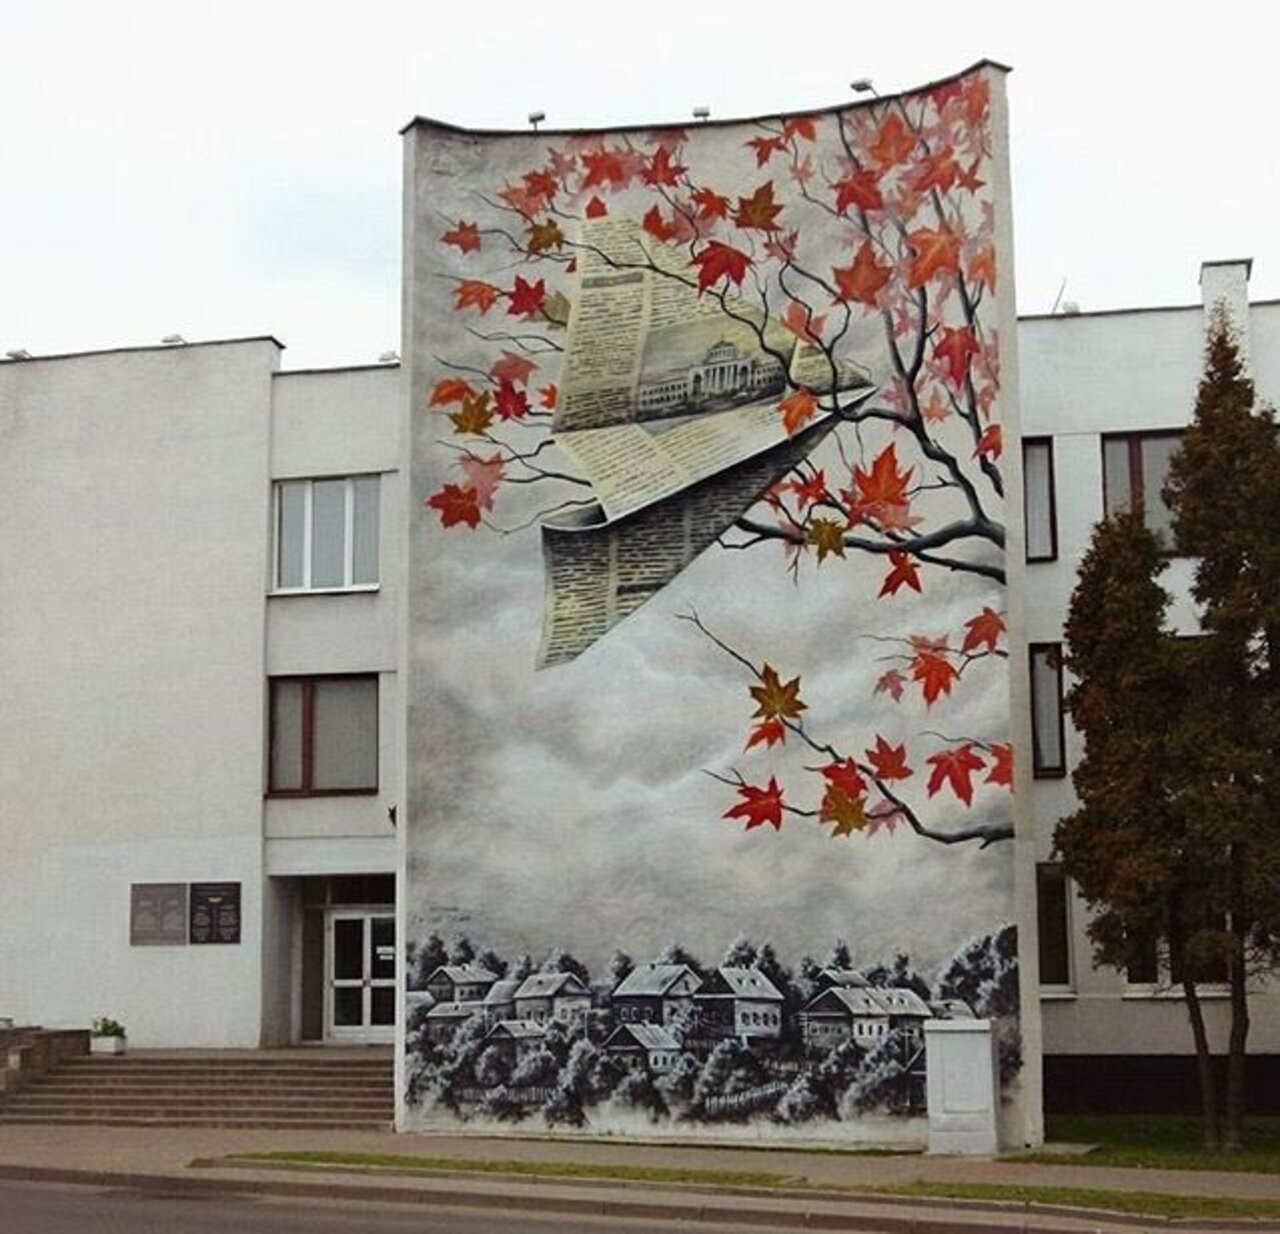 New Street Art by MUTUS in Belarus 

#art #graffiti #mural #streetart https://t.co/QbhXYilZDW